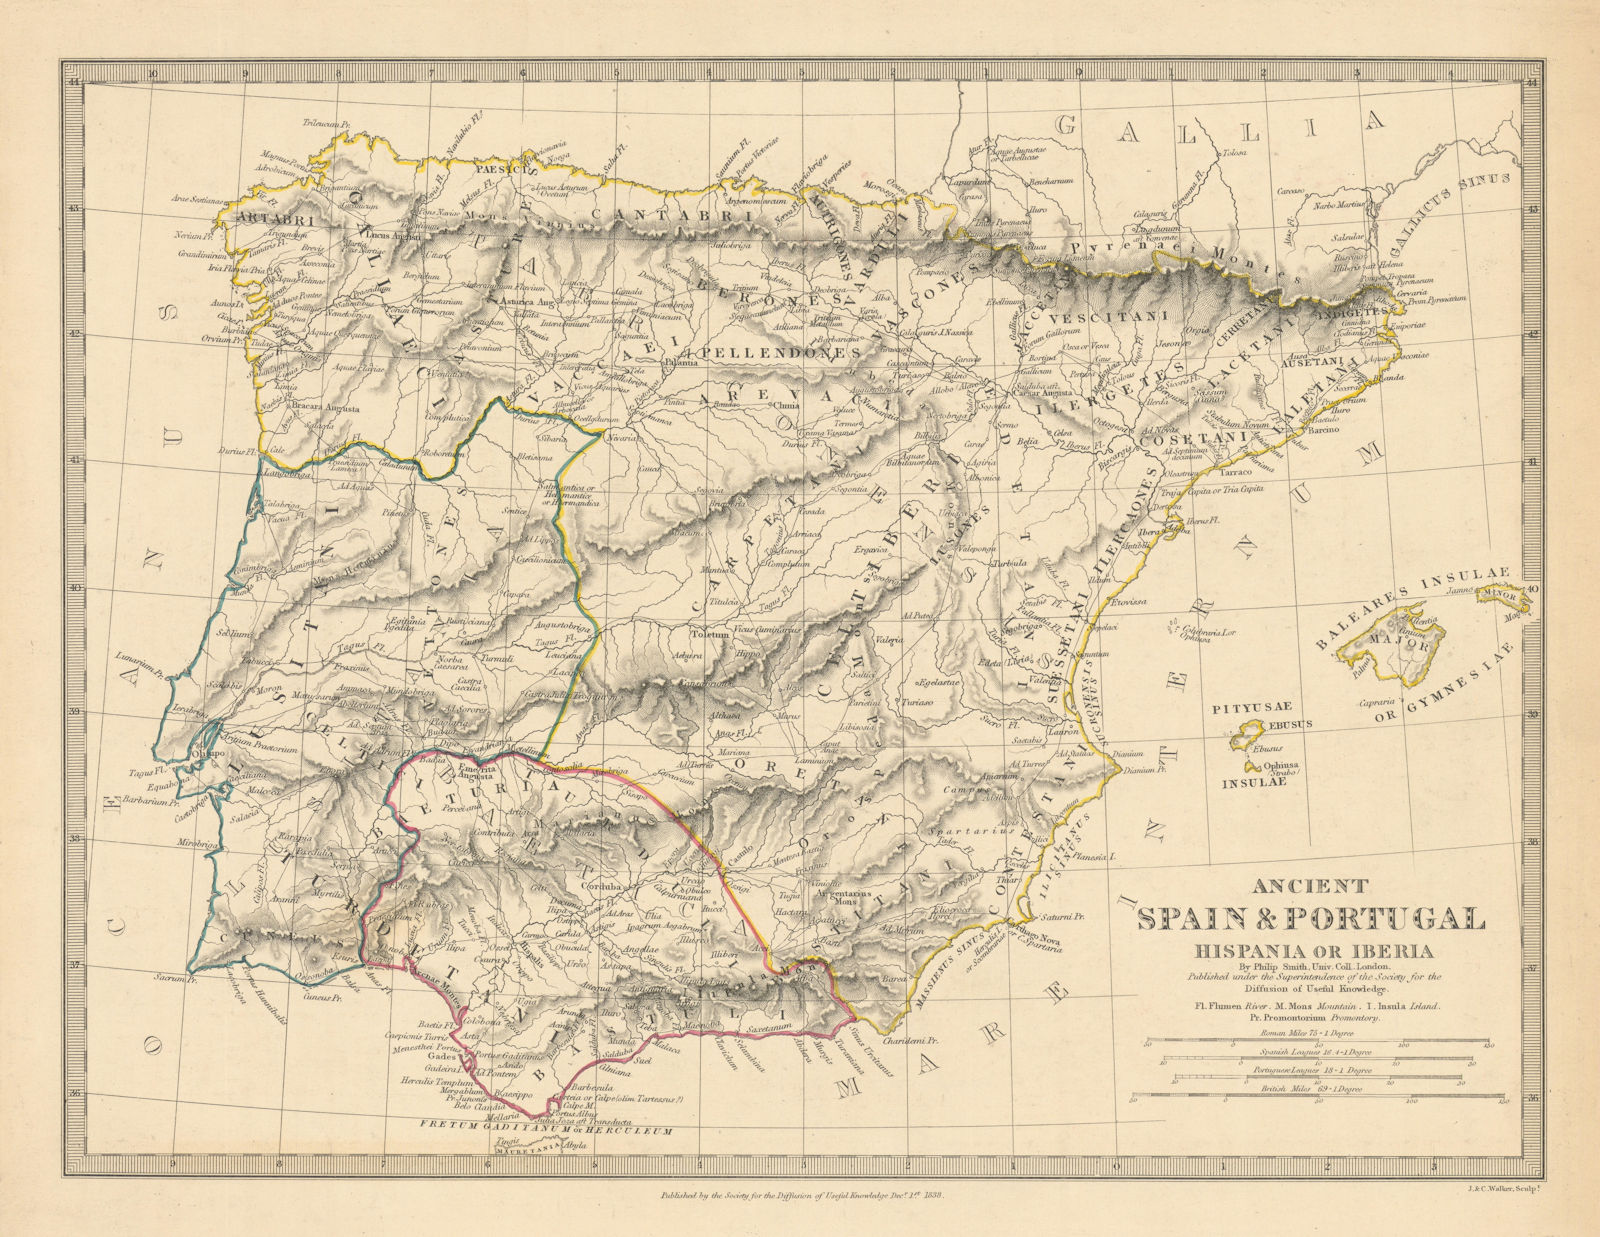 HISPANIA IBERIA. Ancient Spain & Portugal. Roman names & roads. SDUK 1848 map